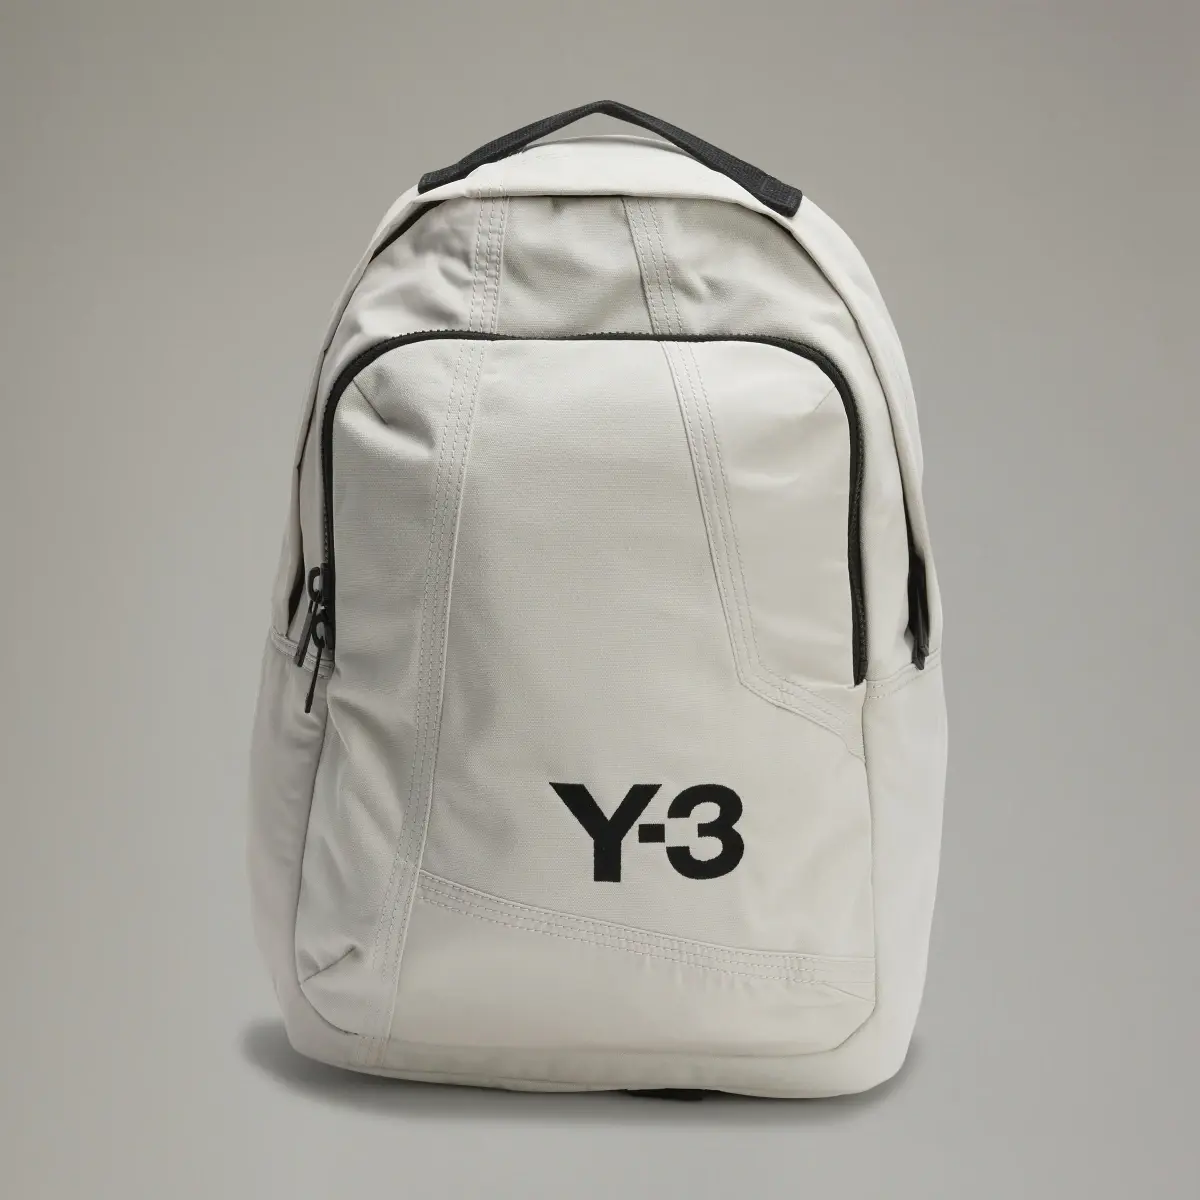 Adidas Y-3 Classic Backpack. 2